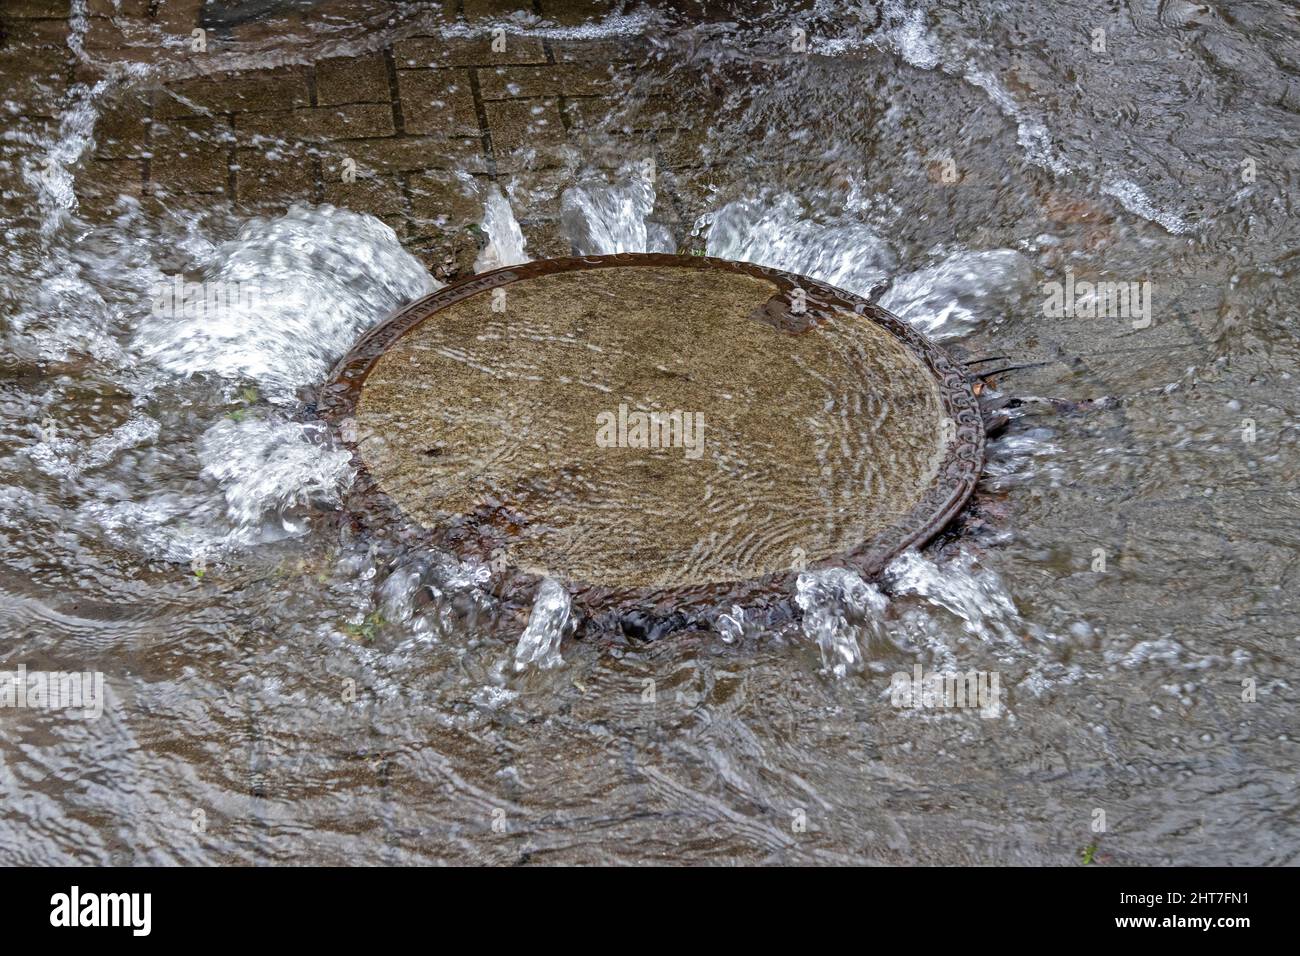 Water emerging from a manhole cover, Wilhelmsburg, Hamburg, Germany Stock Photo